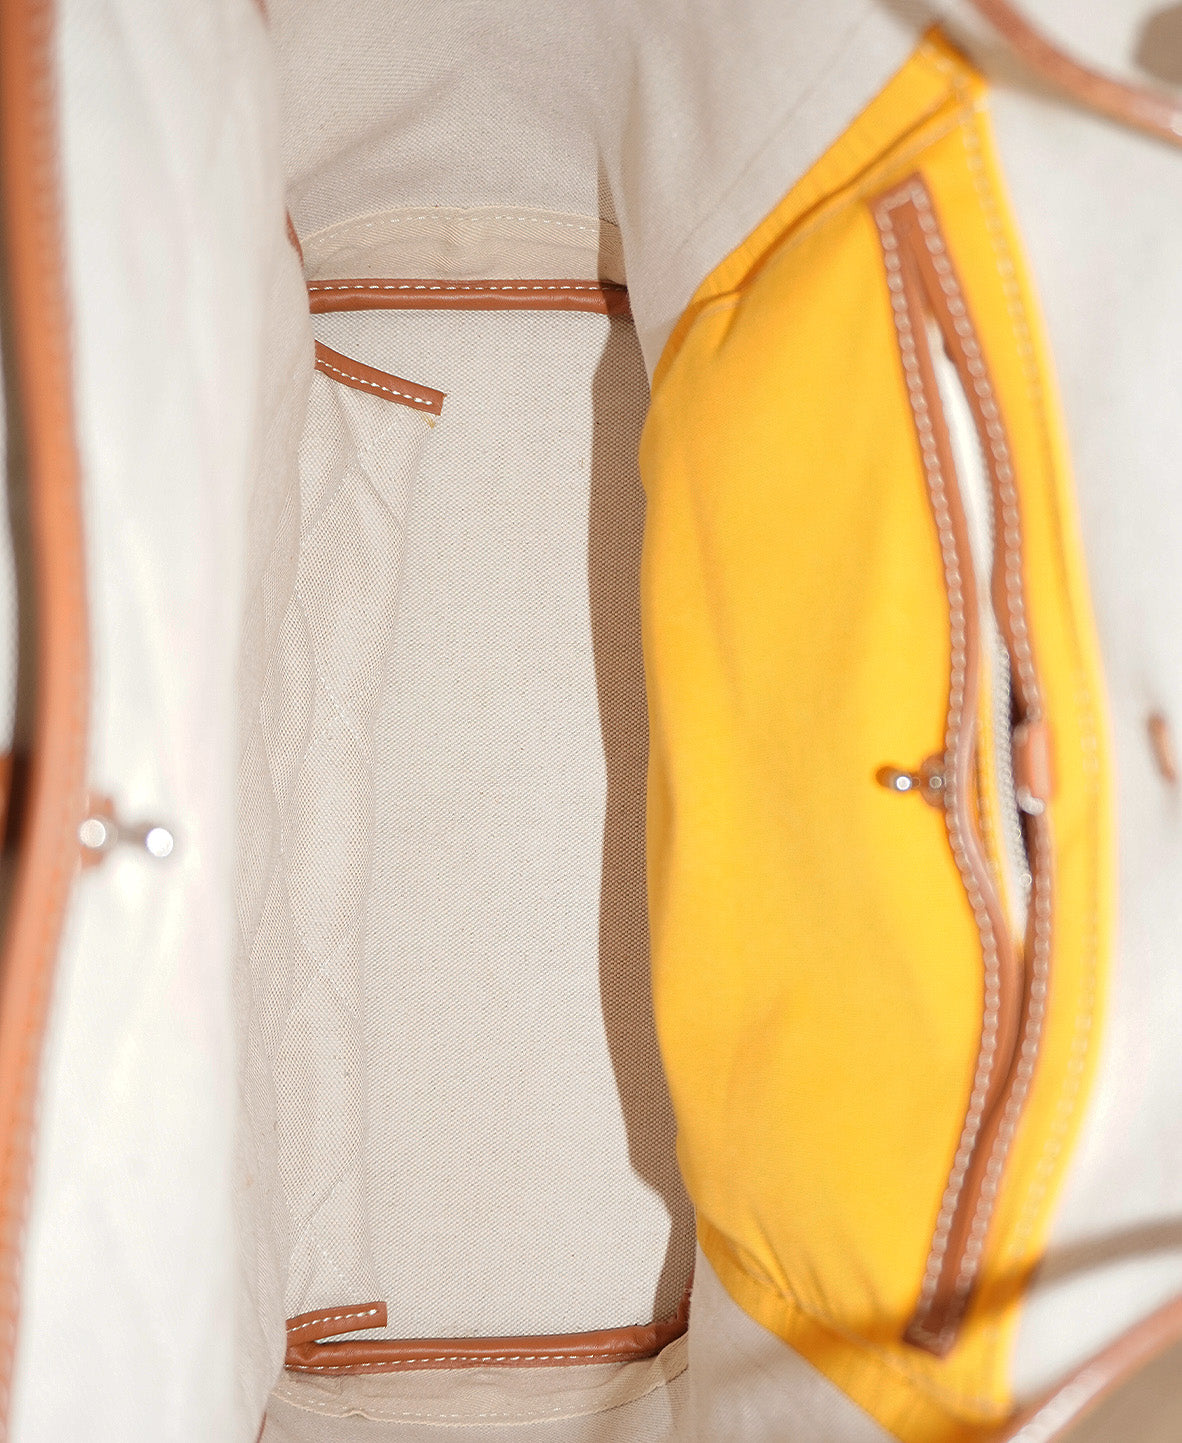 L'alpin leather bag Goyard Brown in Leather - 16537125